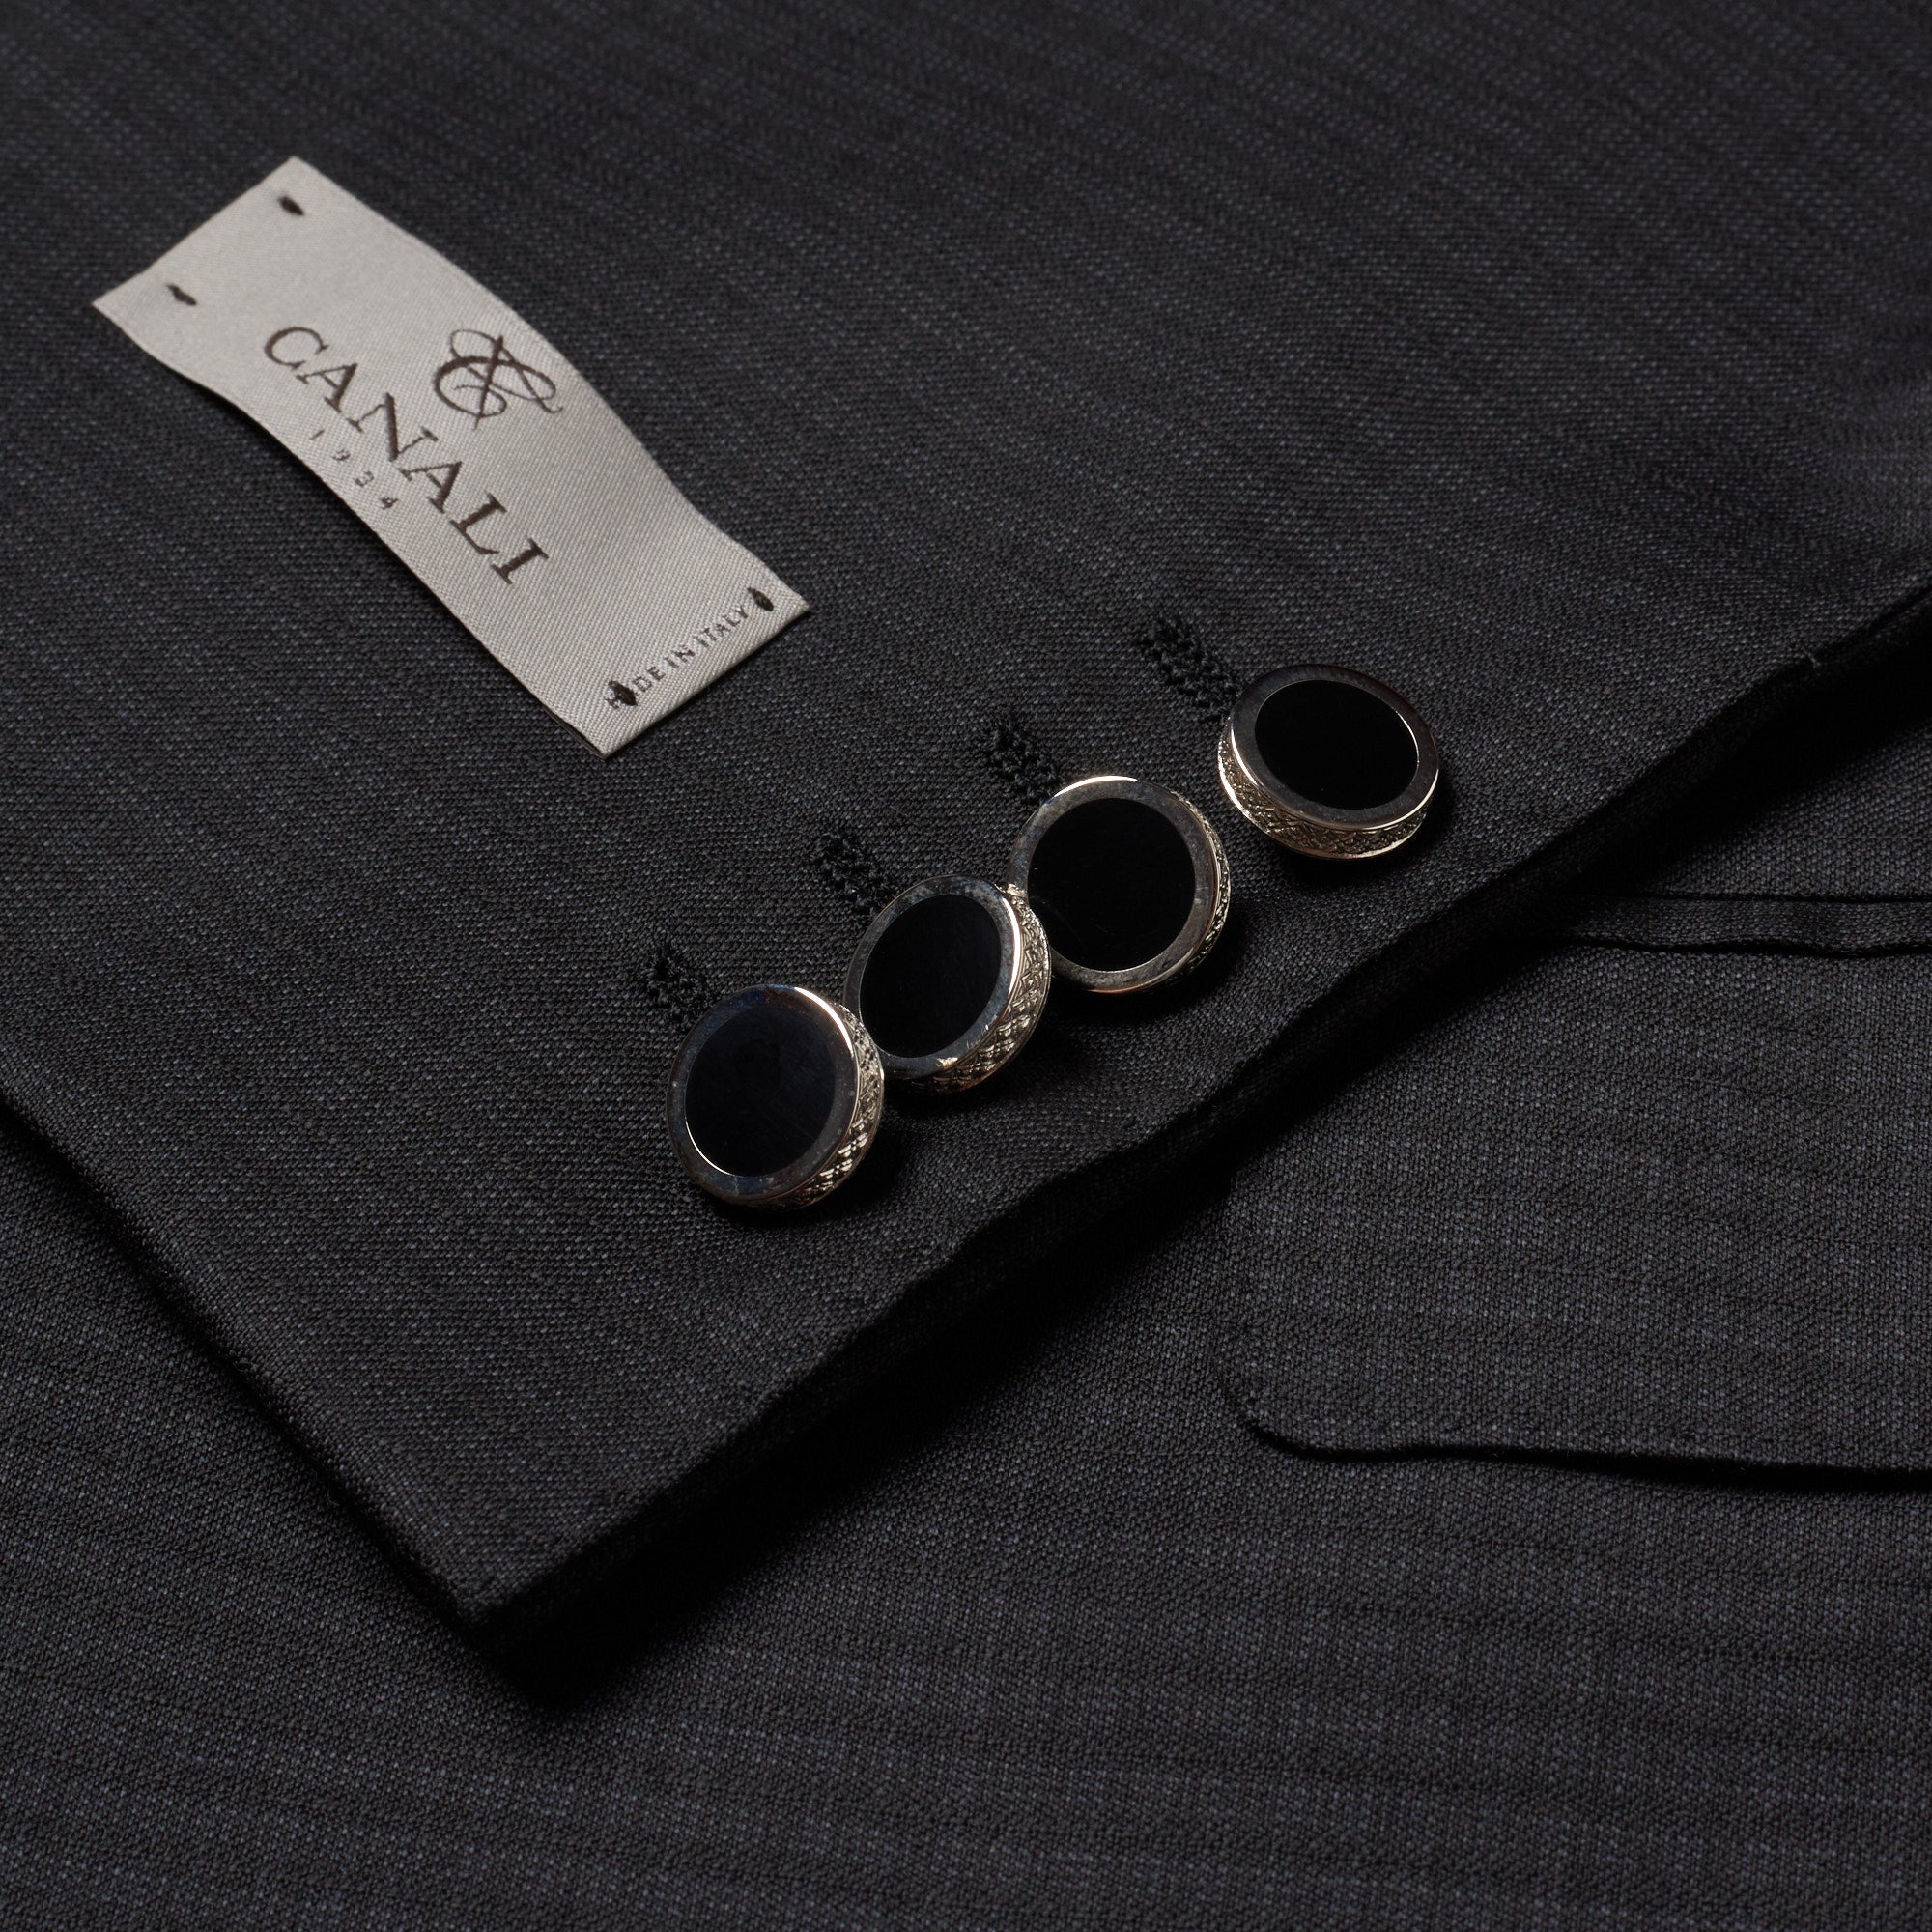 CANALI Dark Gray Patterned Wool Peak Lapel Suit EU 50 US 40 Regular Slim Fit Cut CANALI